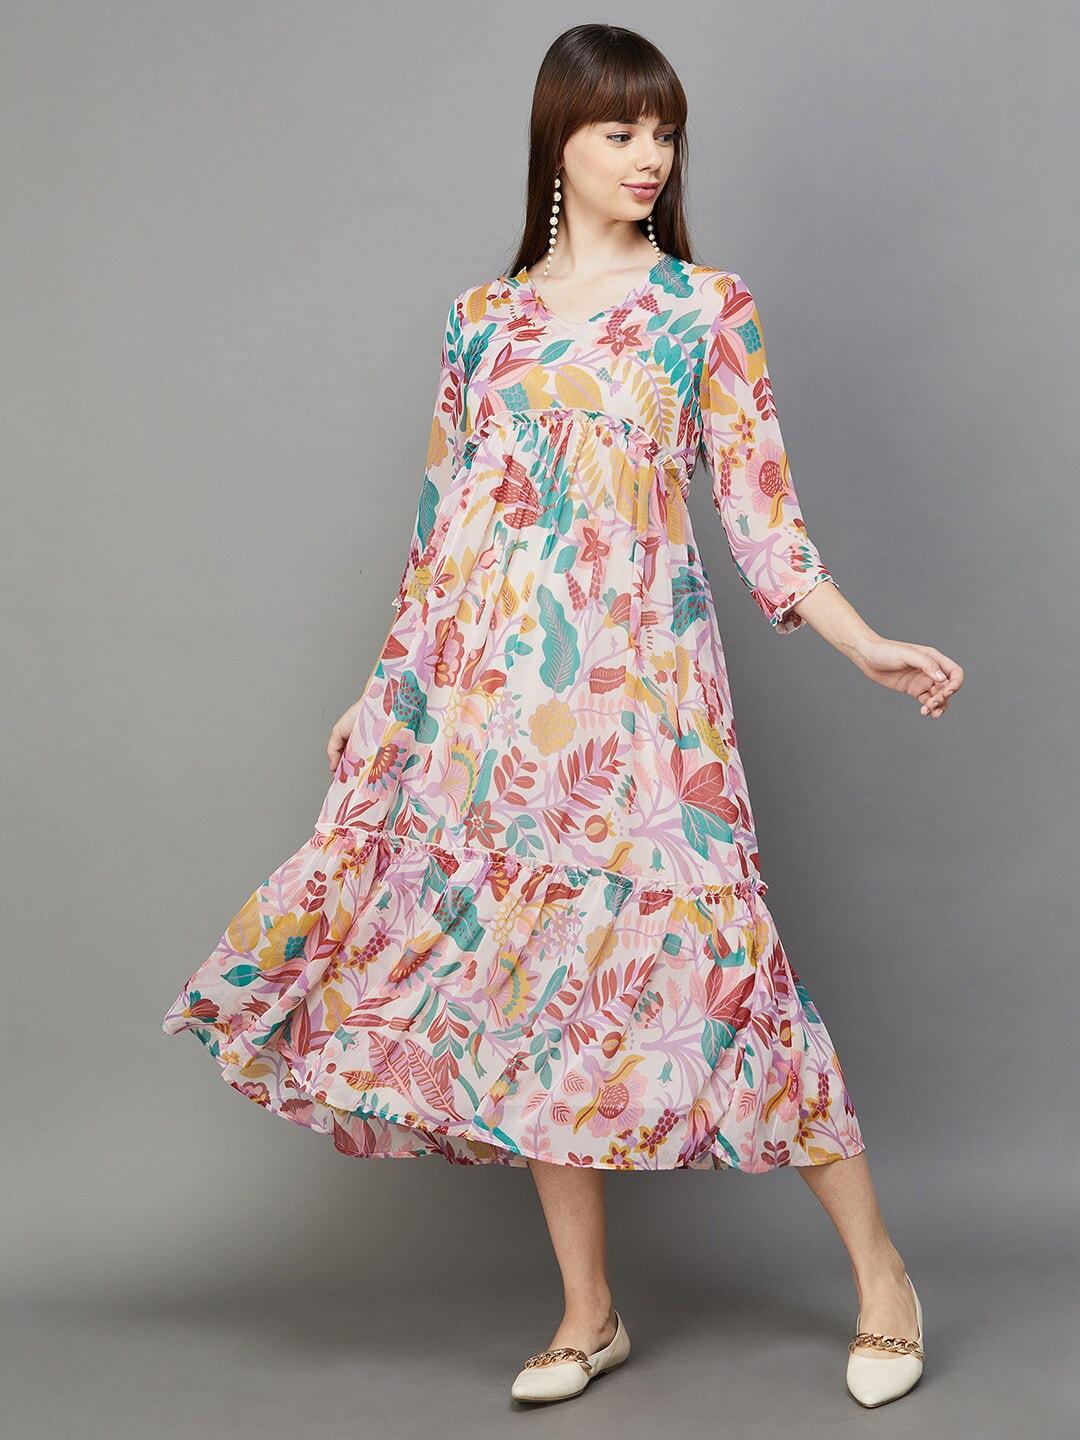 colour me by melange floral printed v-neck fit &flare pleated dress